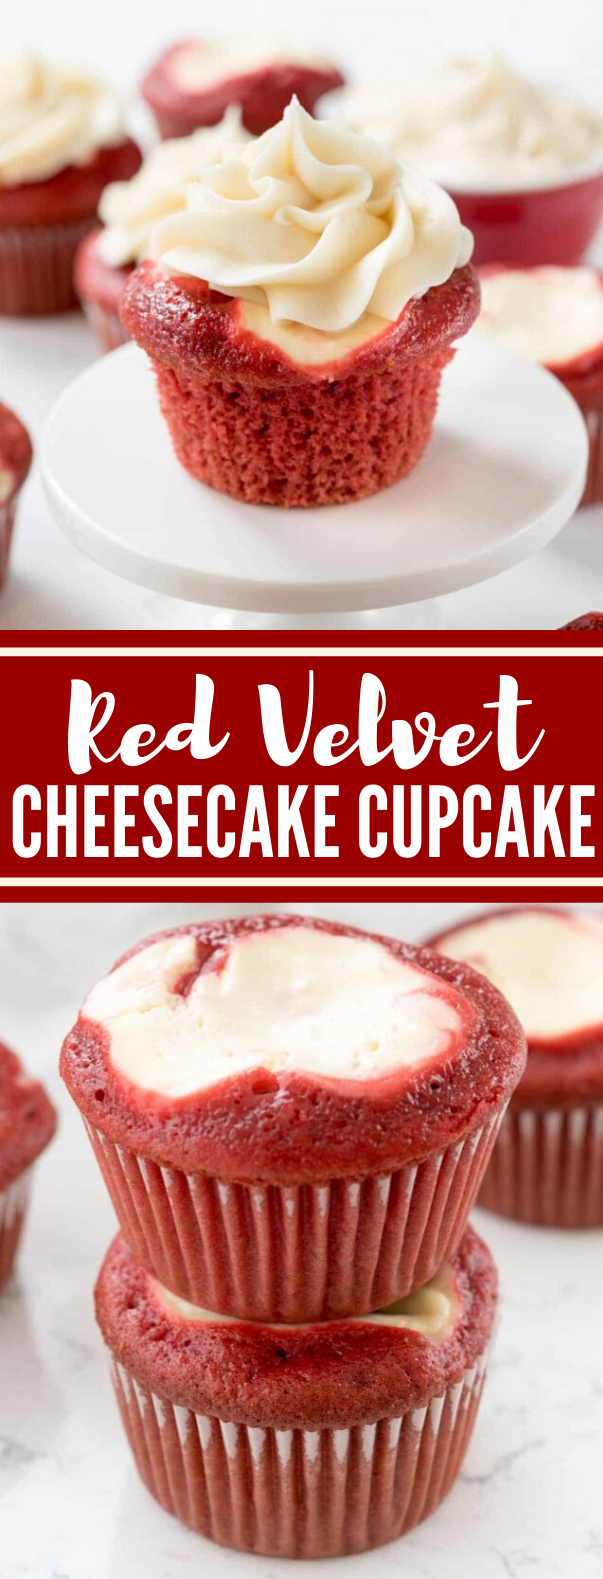 Red Velvet Cheesecake Cupcakes #desserts #cake